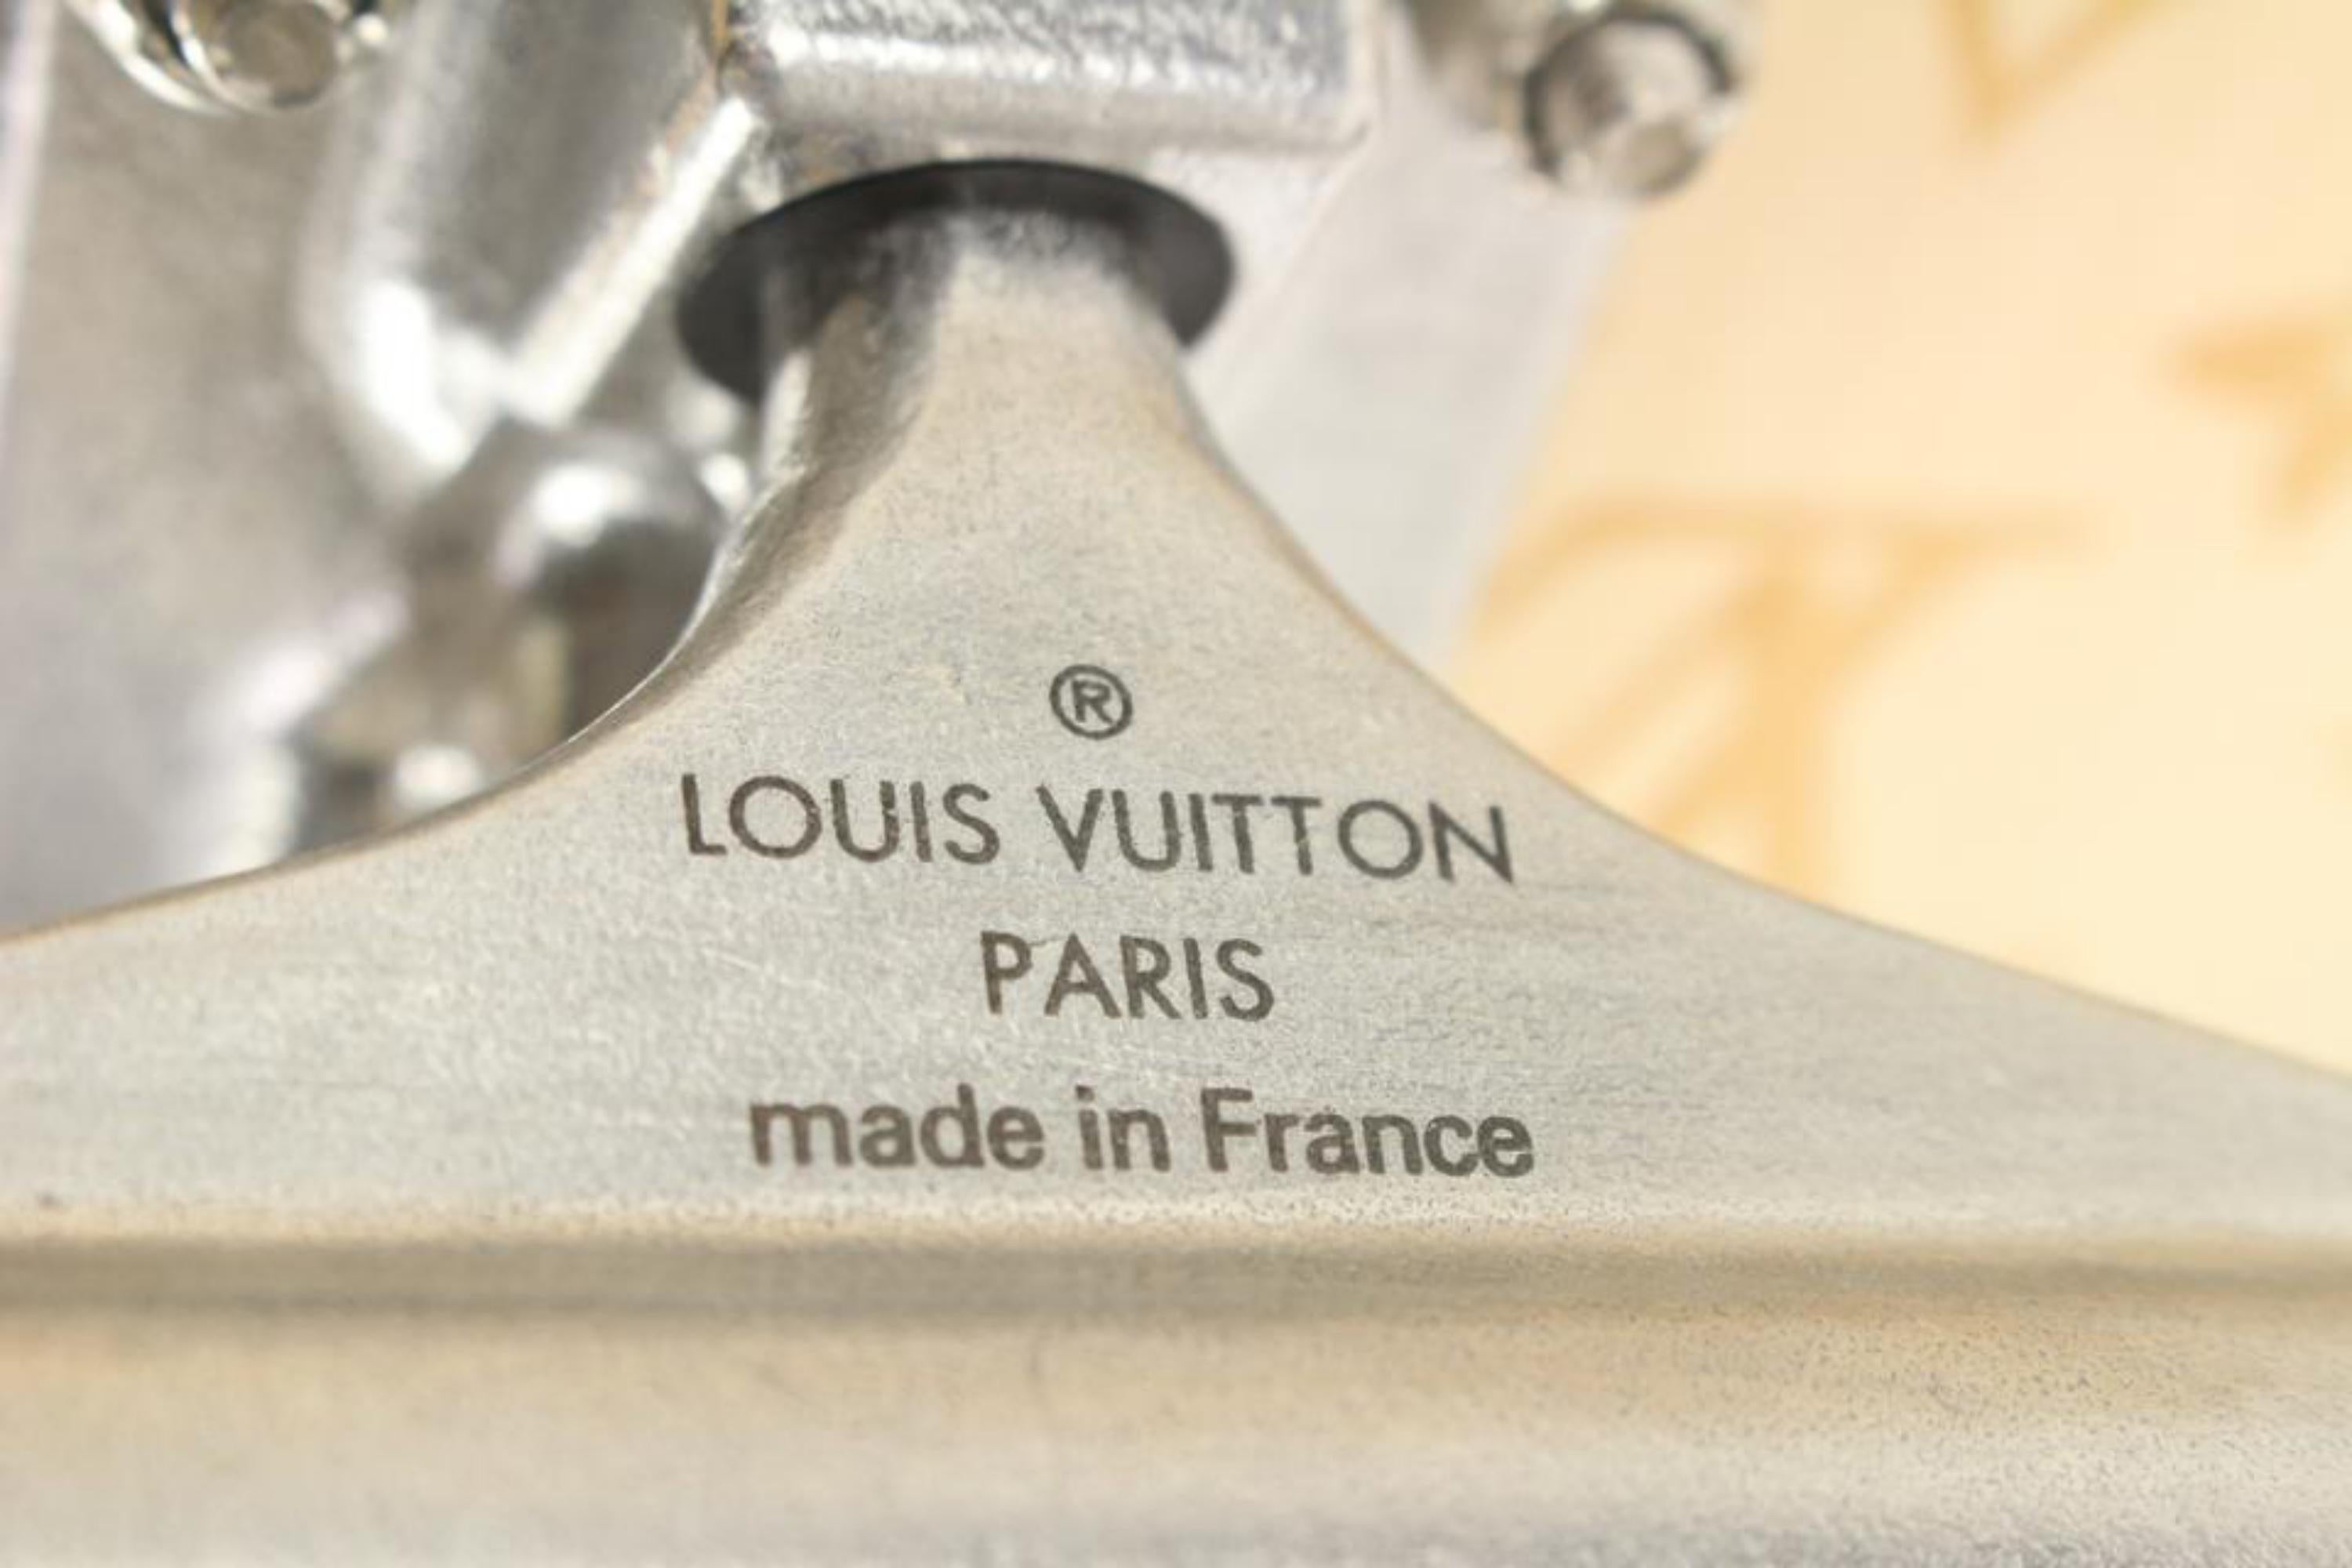 Louis Vuitton SS21 Virgil Abloh LV Monogram Skateboard 1223lv6
Date Code/Serial Number: GI0637 KC0261
Made In: France
Measurements: Length:  31